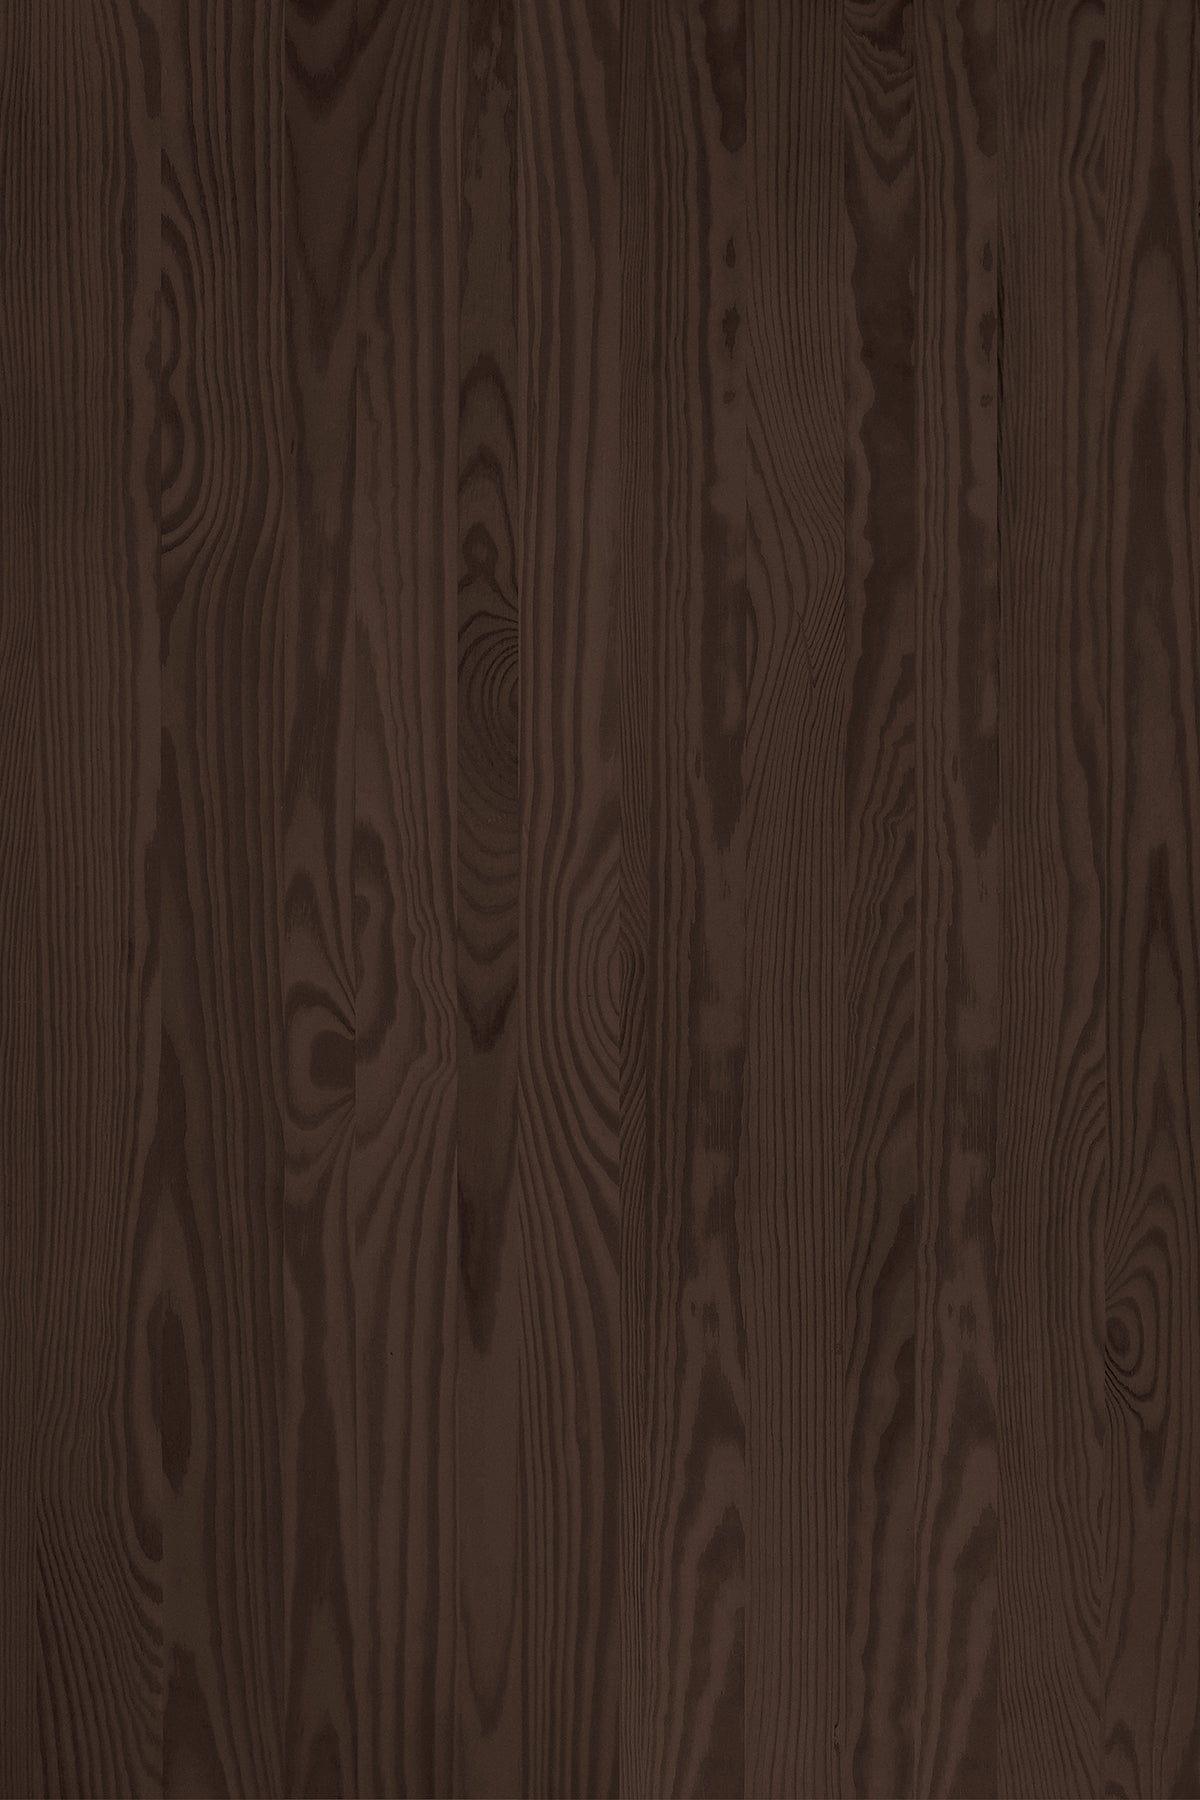 dark wood panel